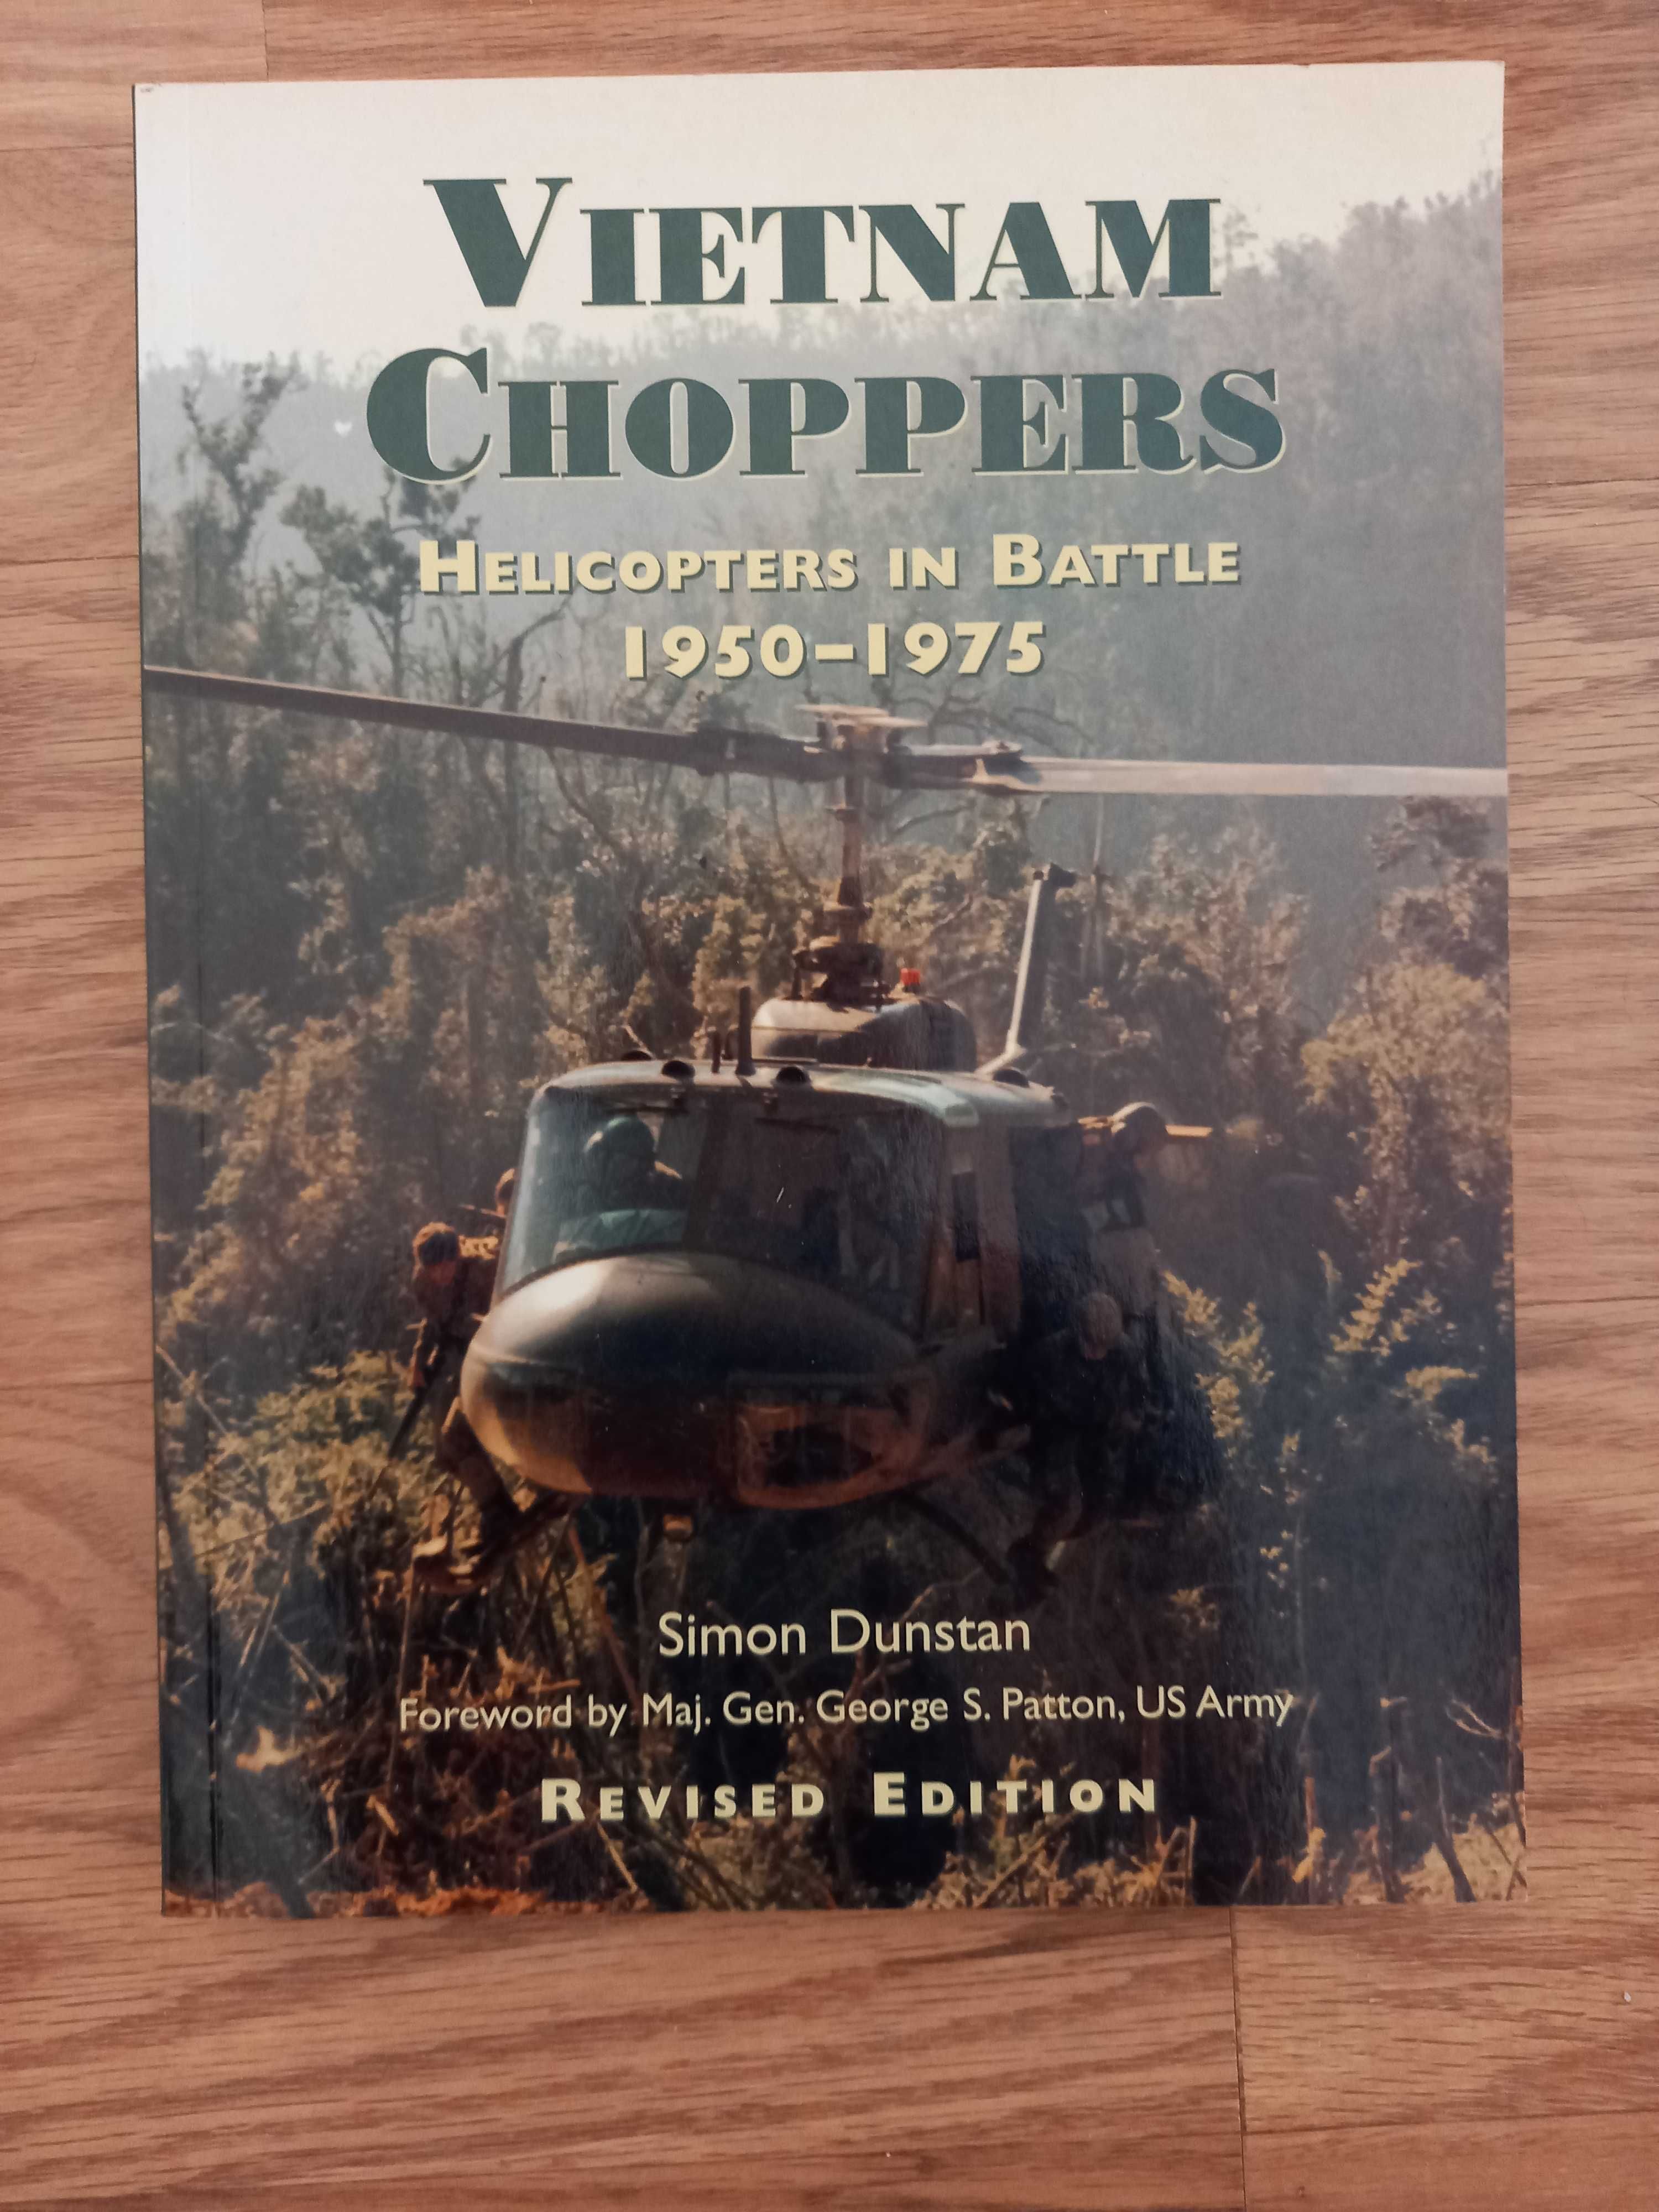 Aviação Vietnam Choppers Helicopters in Battle  1950-75